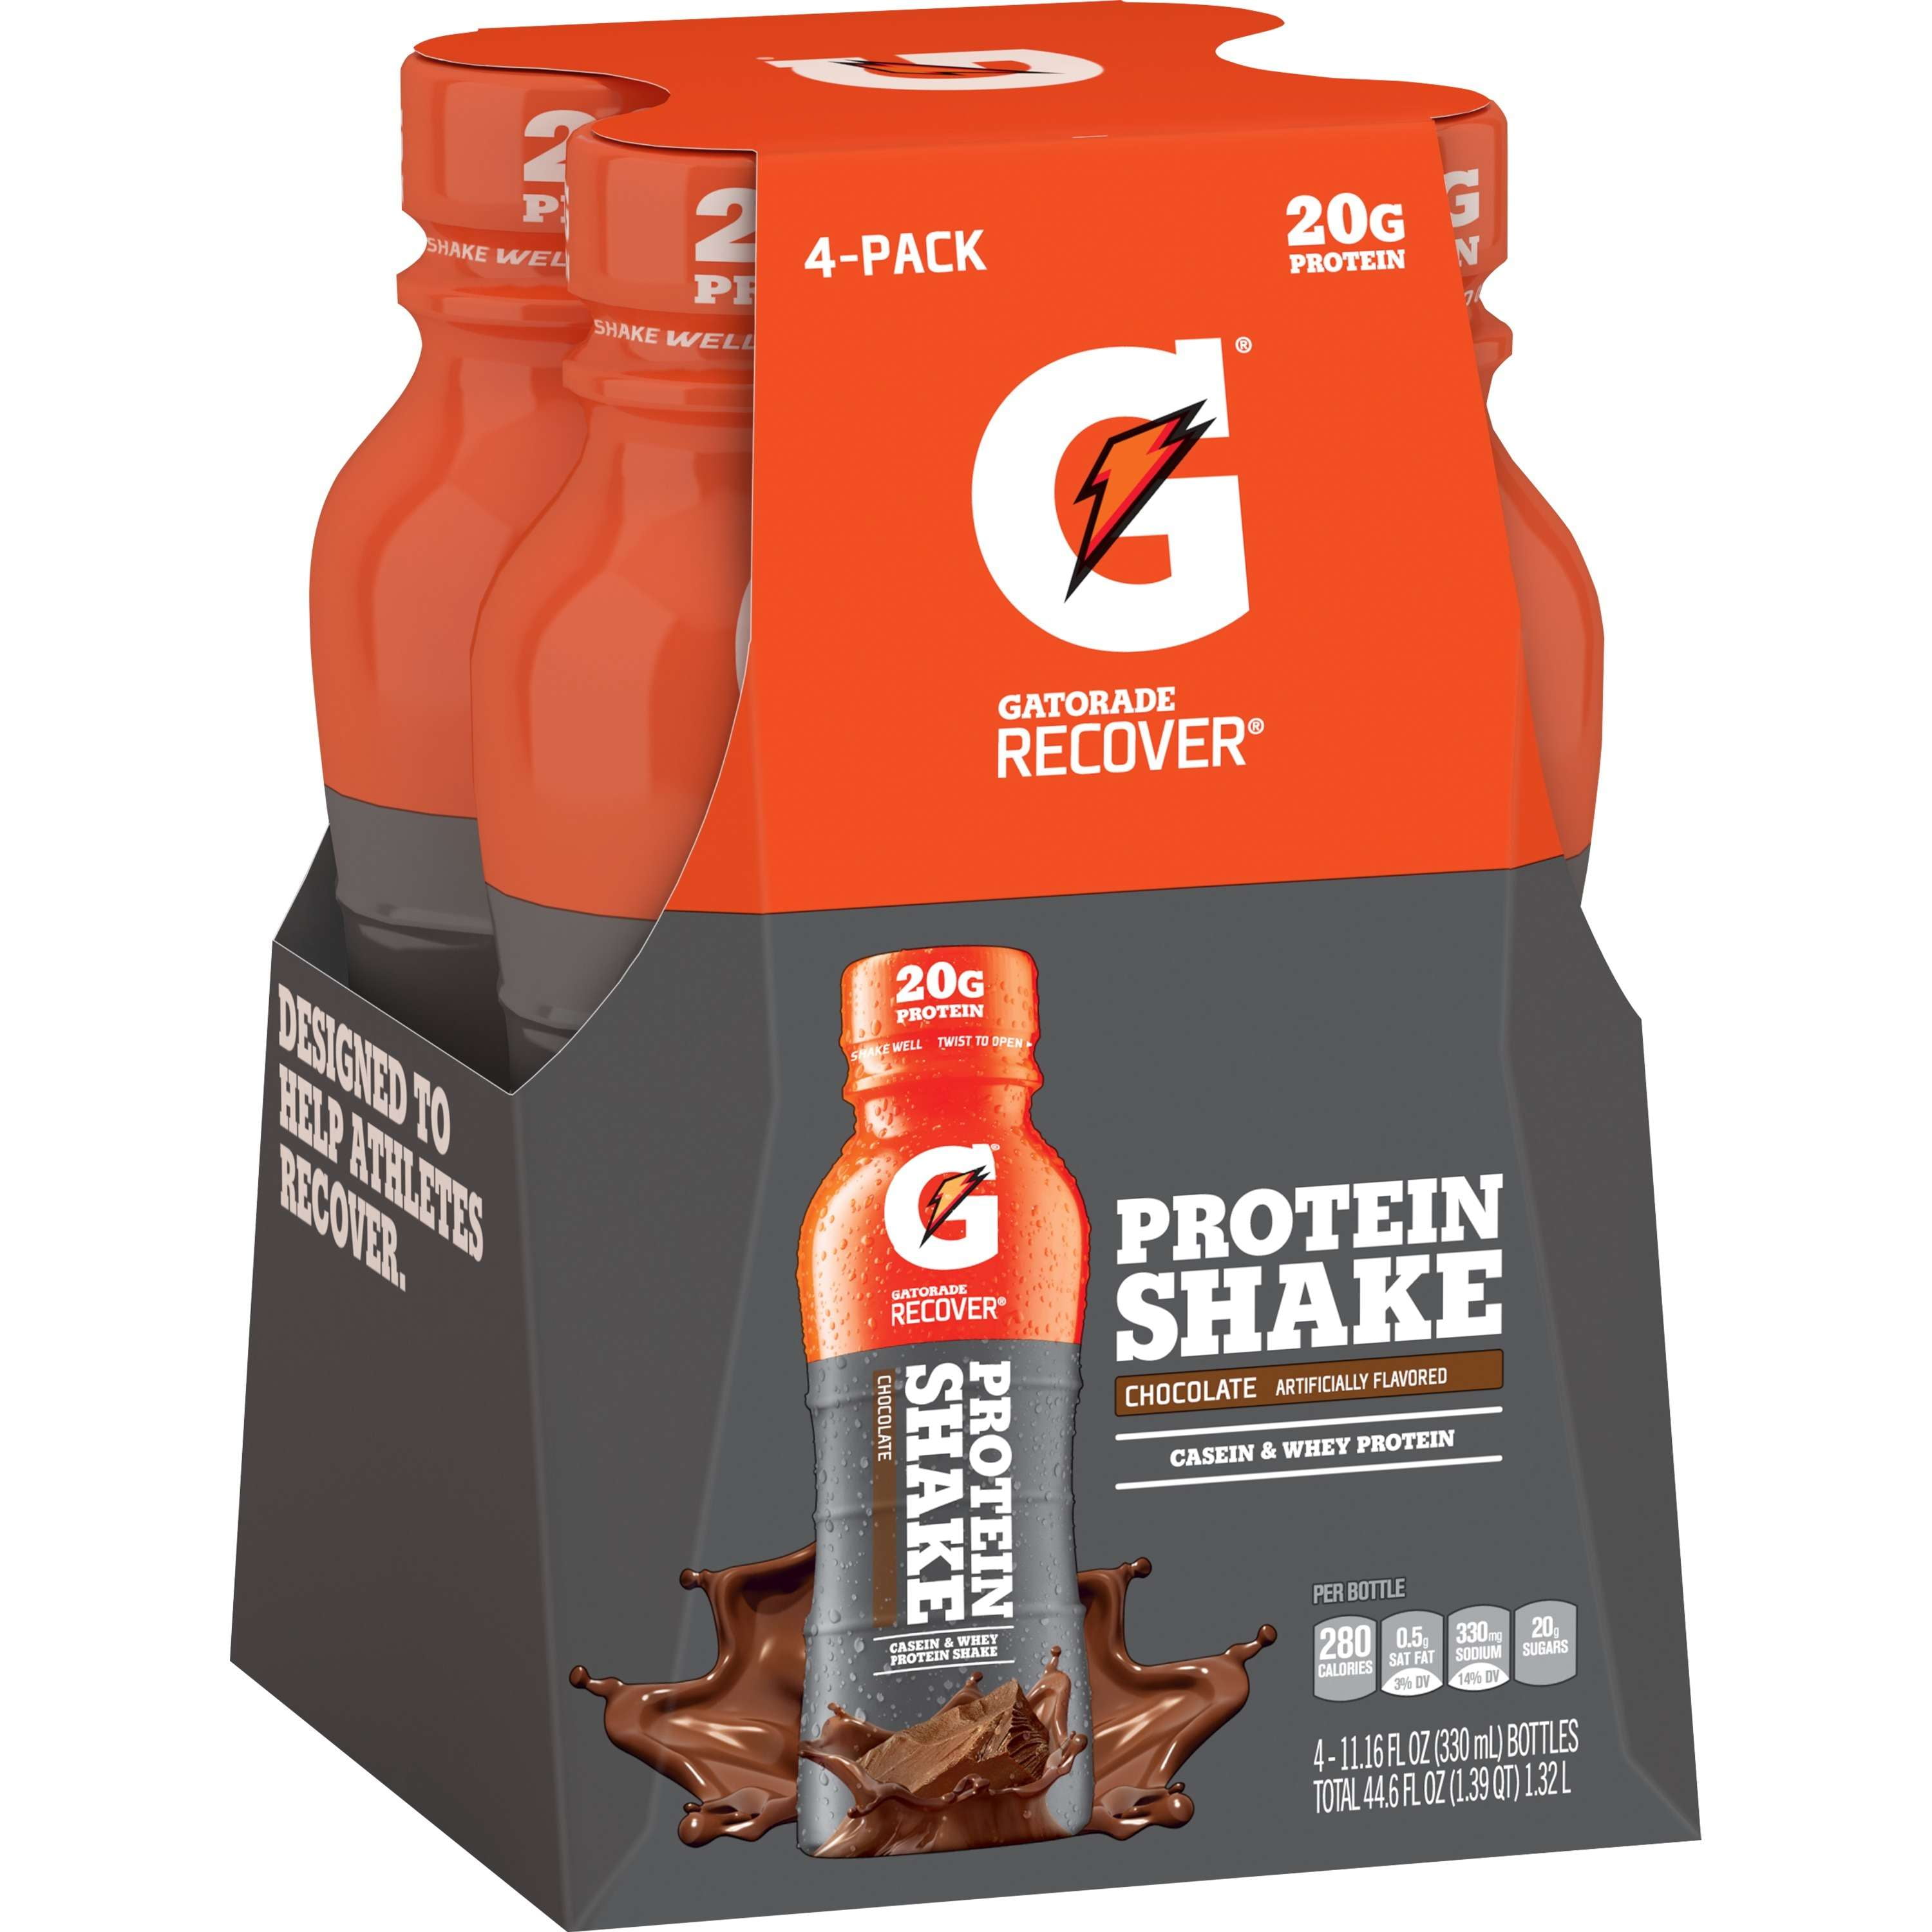 Gatorade Recover Protein Shake, Chocolate, 20g Protein, 4 Ct